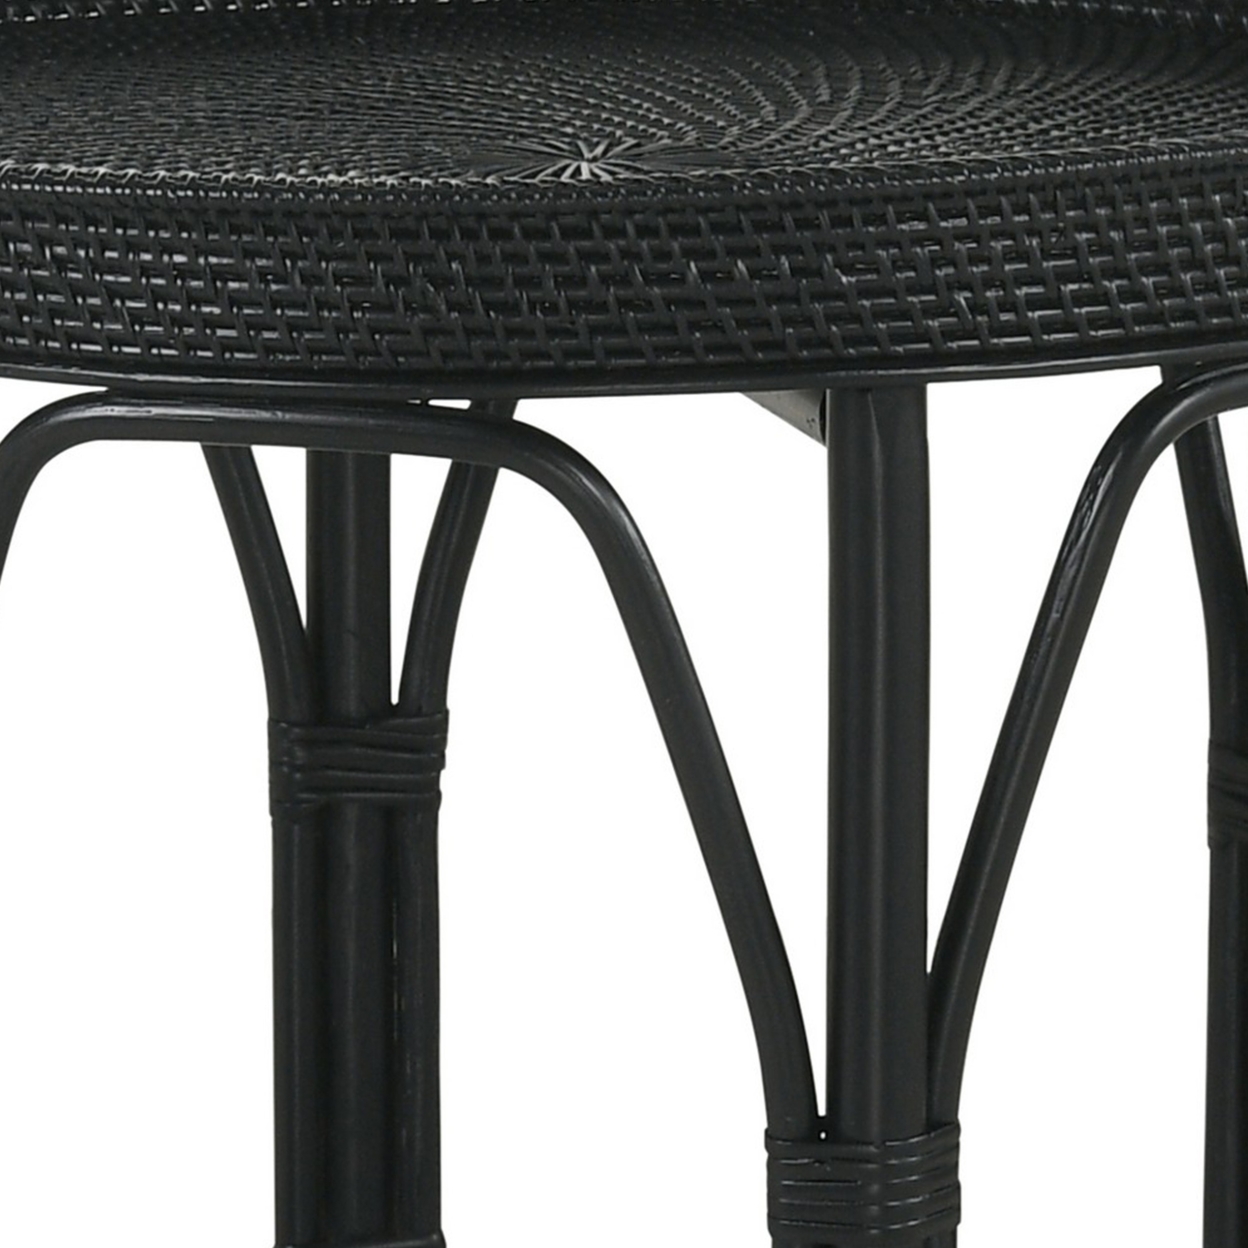 Raya 26 Inch Accent Table, Woven Rattan Tray Edge Tabletop, Black Finish- Saltoro Sherpi